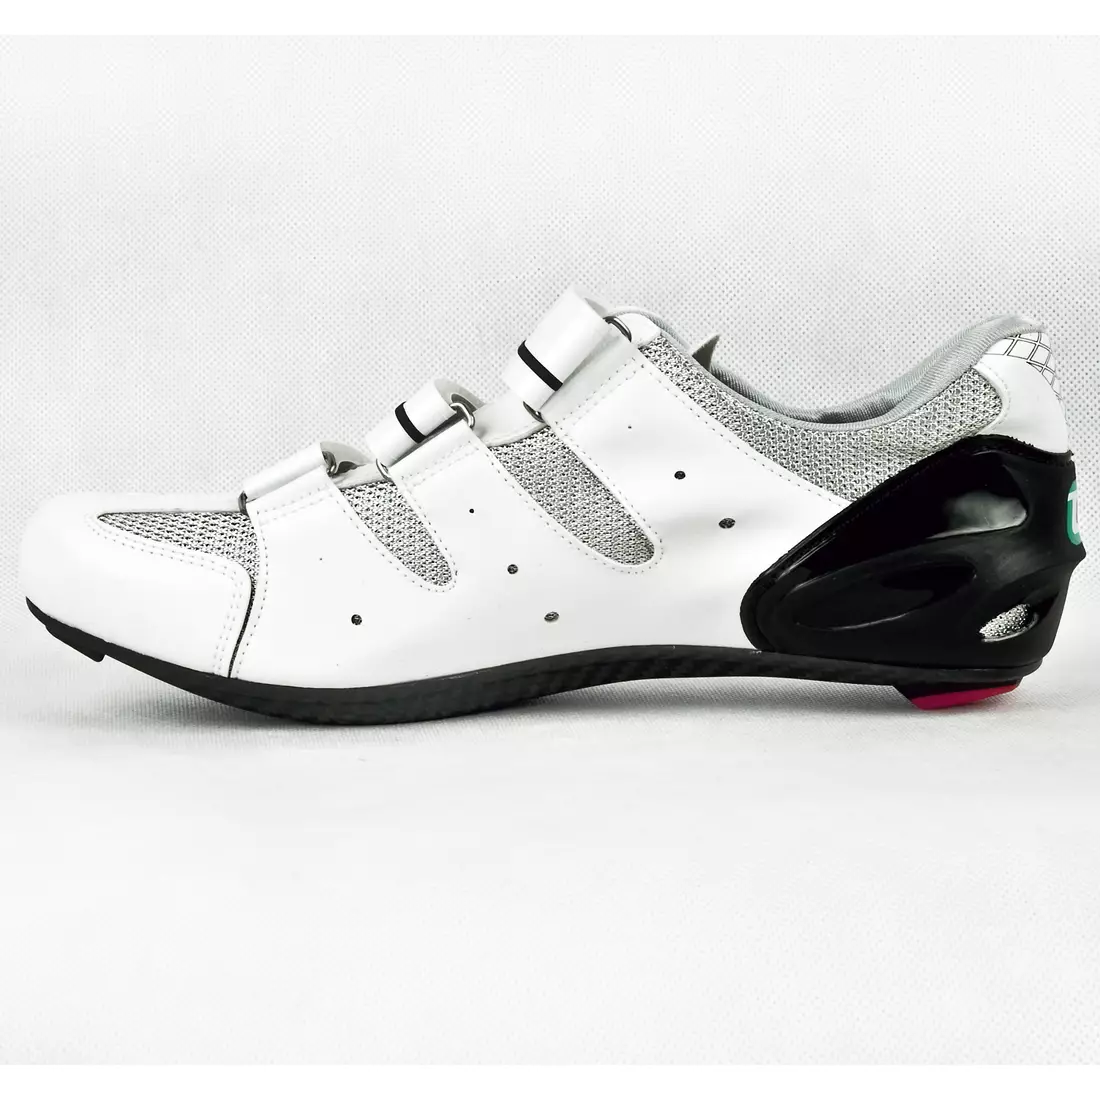 CRONO PERLA CARBON - pantofi de ciclism rutier - culoare: Alb